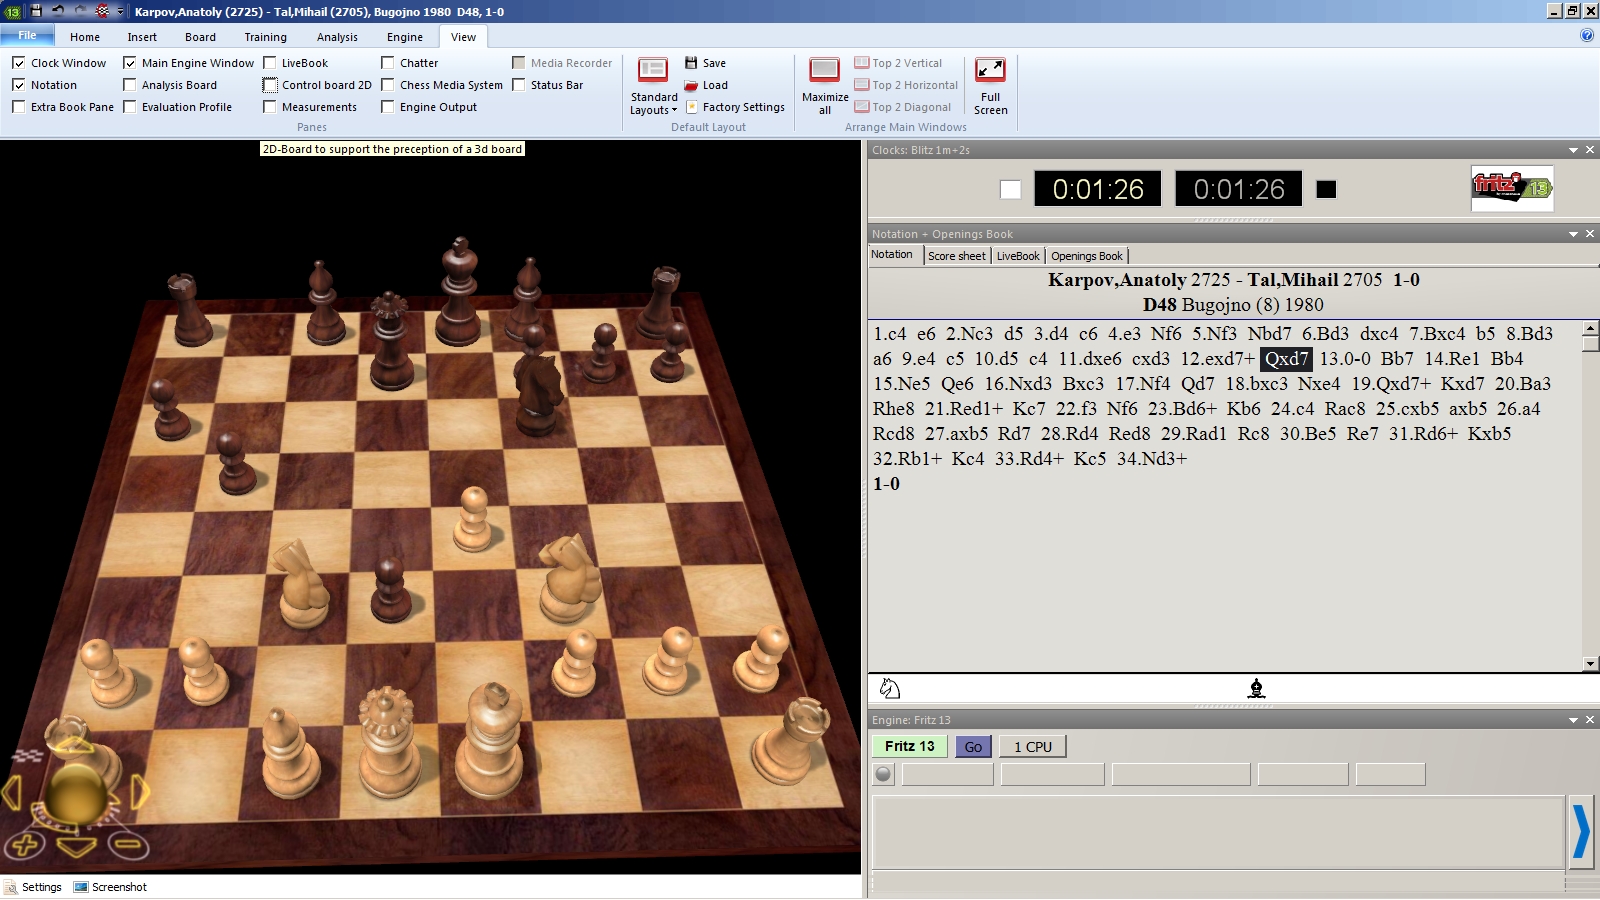 ChessBase 13